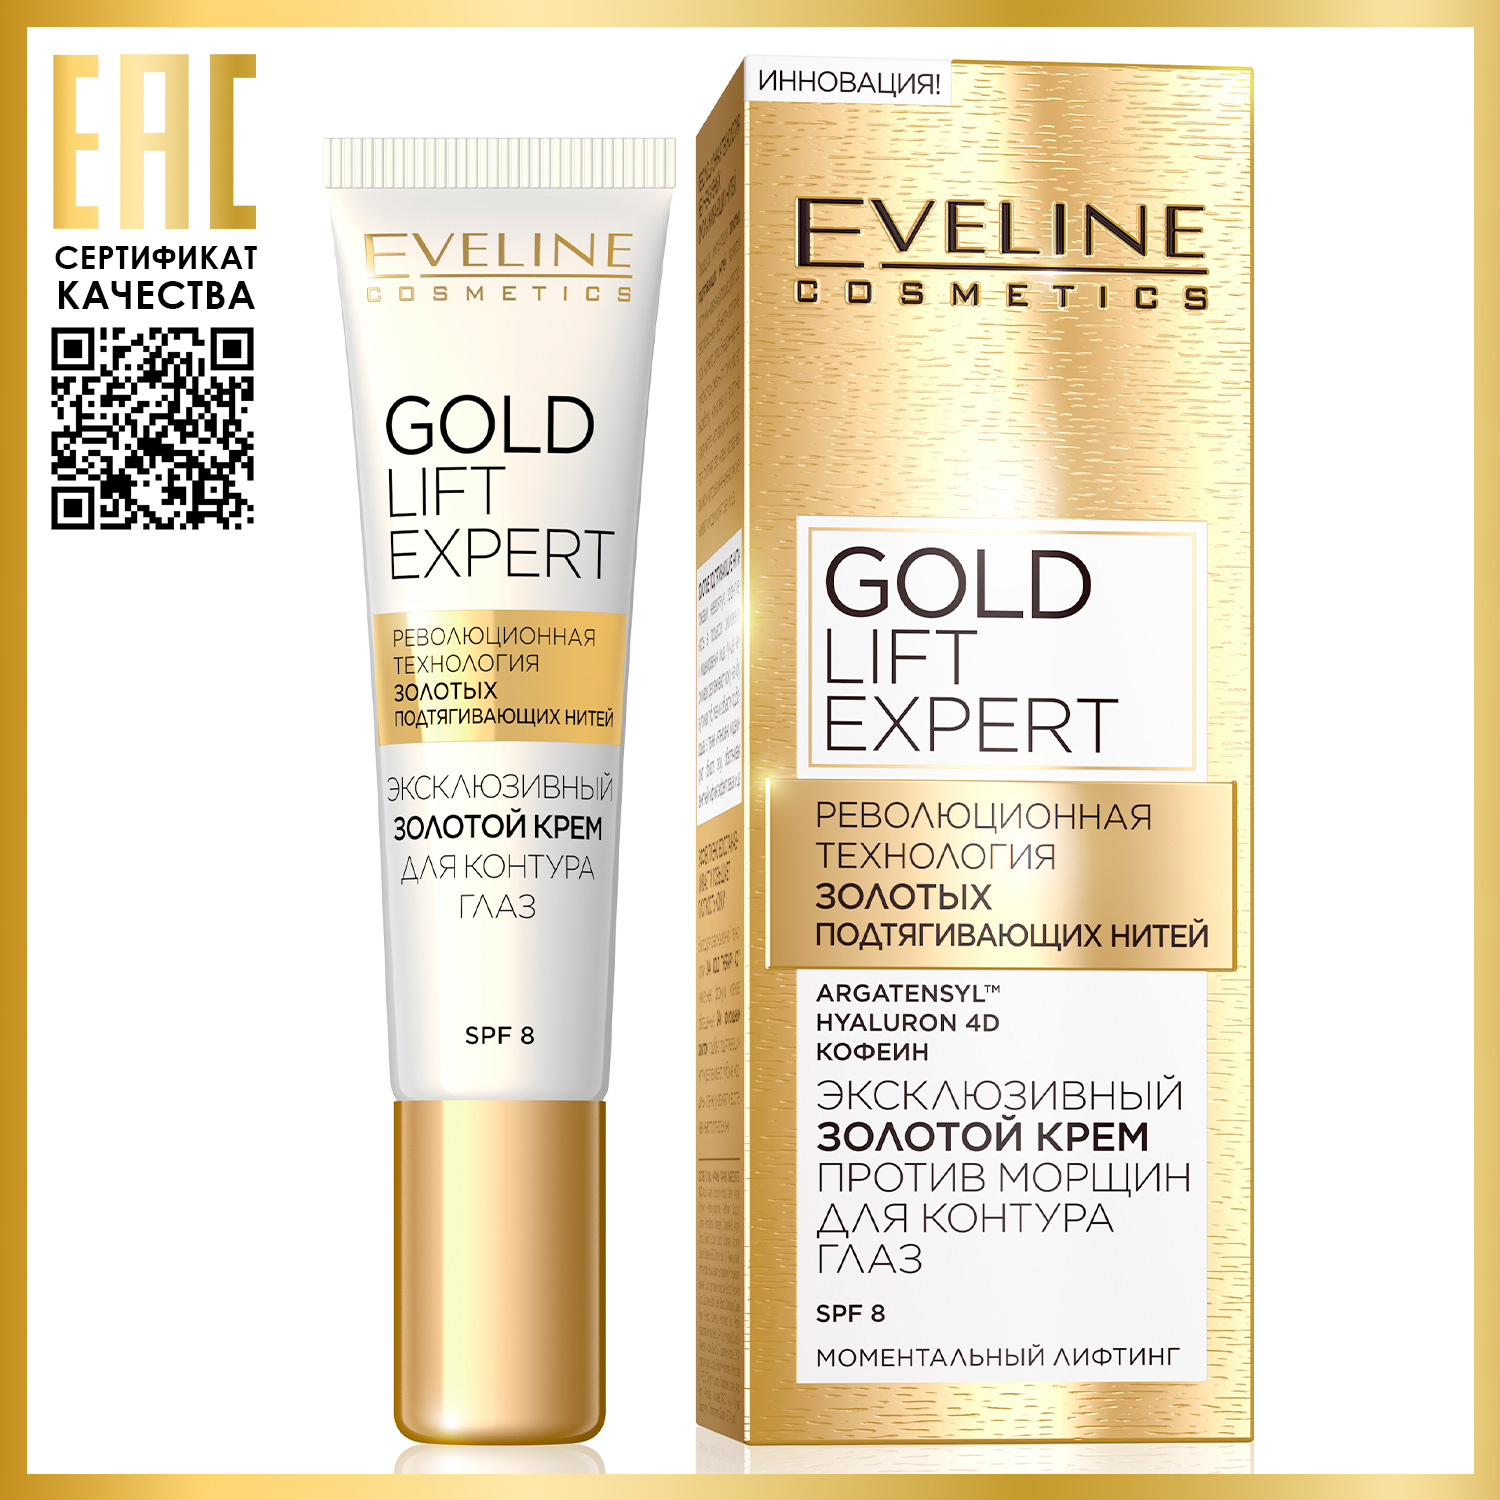 Gold lift. Eveline Gold Lift Expert 15мл крем для контура глаз. Eveline косметика Gold Lift Expert. Крем Eveline Gold Lift Expert против морщин для контуров глаз. Eveline кр пр/морщ д/гл 15 Gold Lift Exp.